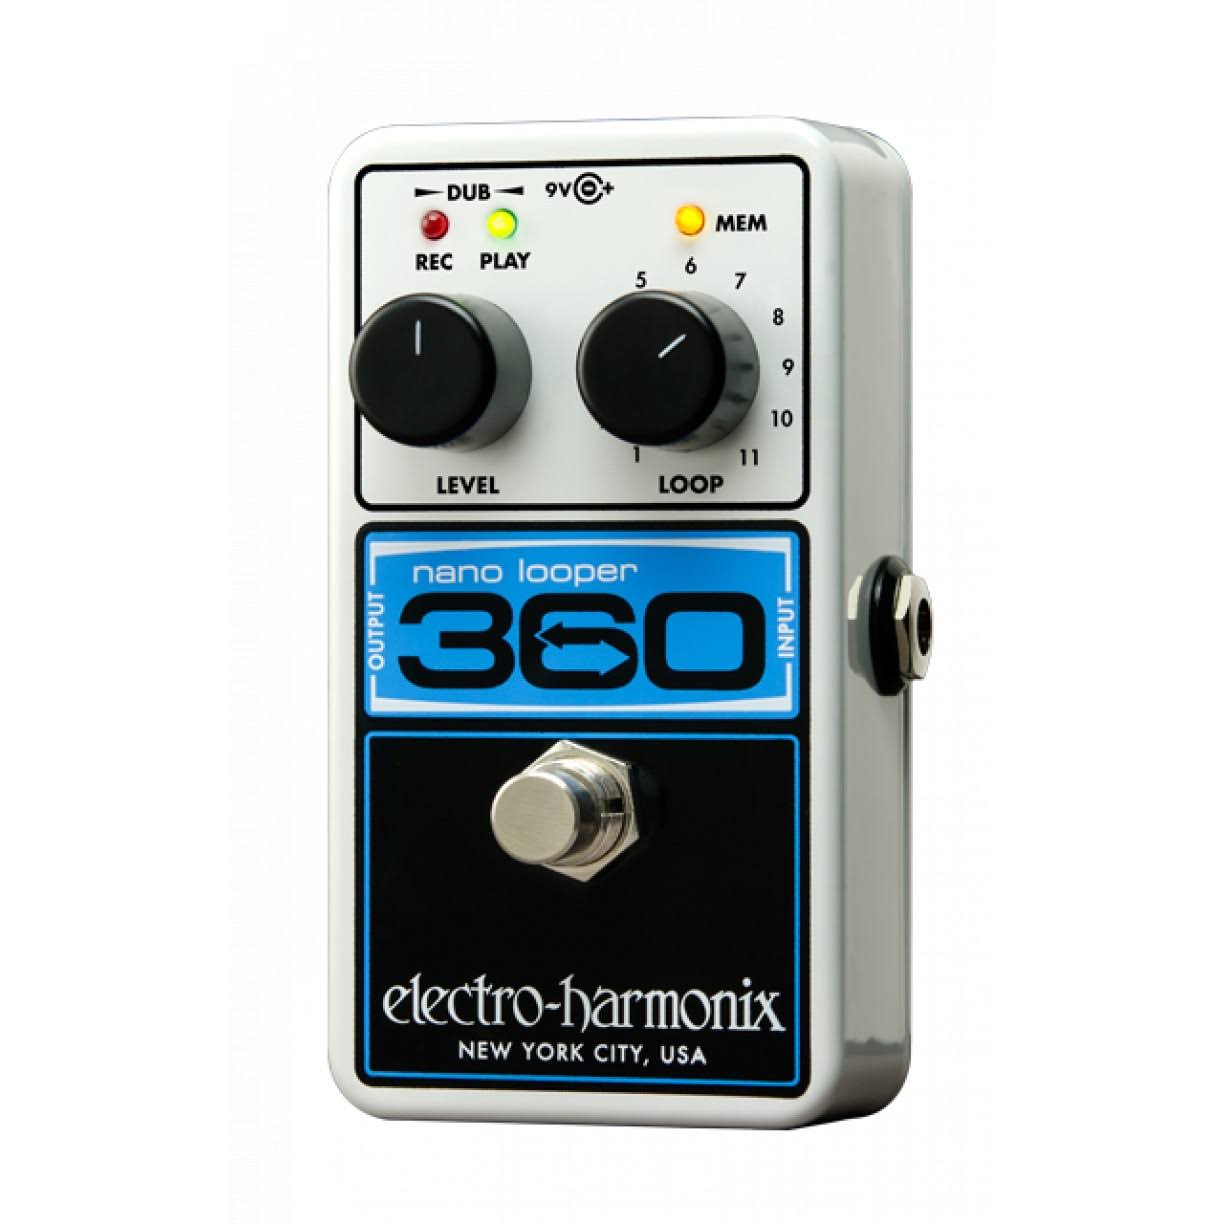 Electro-Harmonix 360 Nano Looper Guitar Looper Effects Pedal